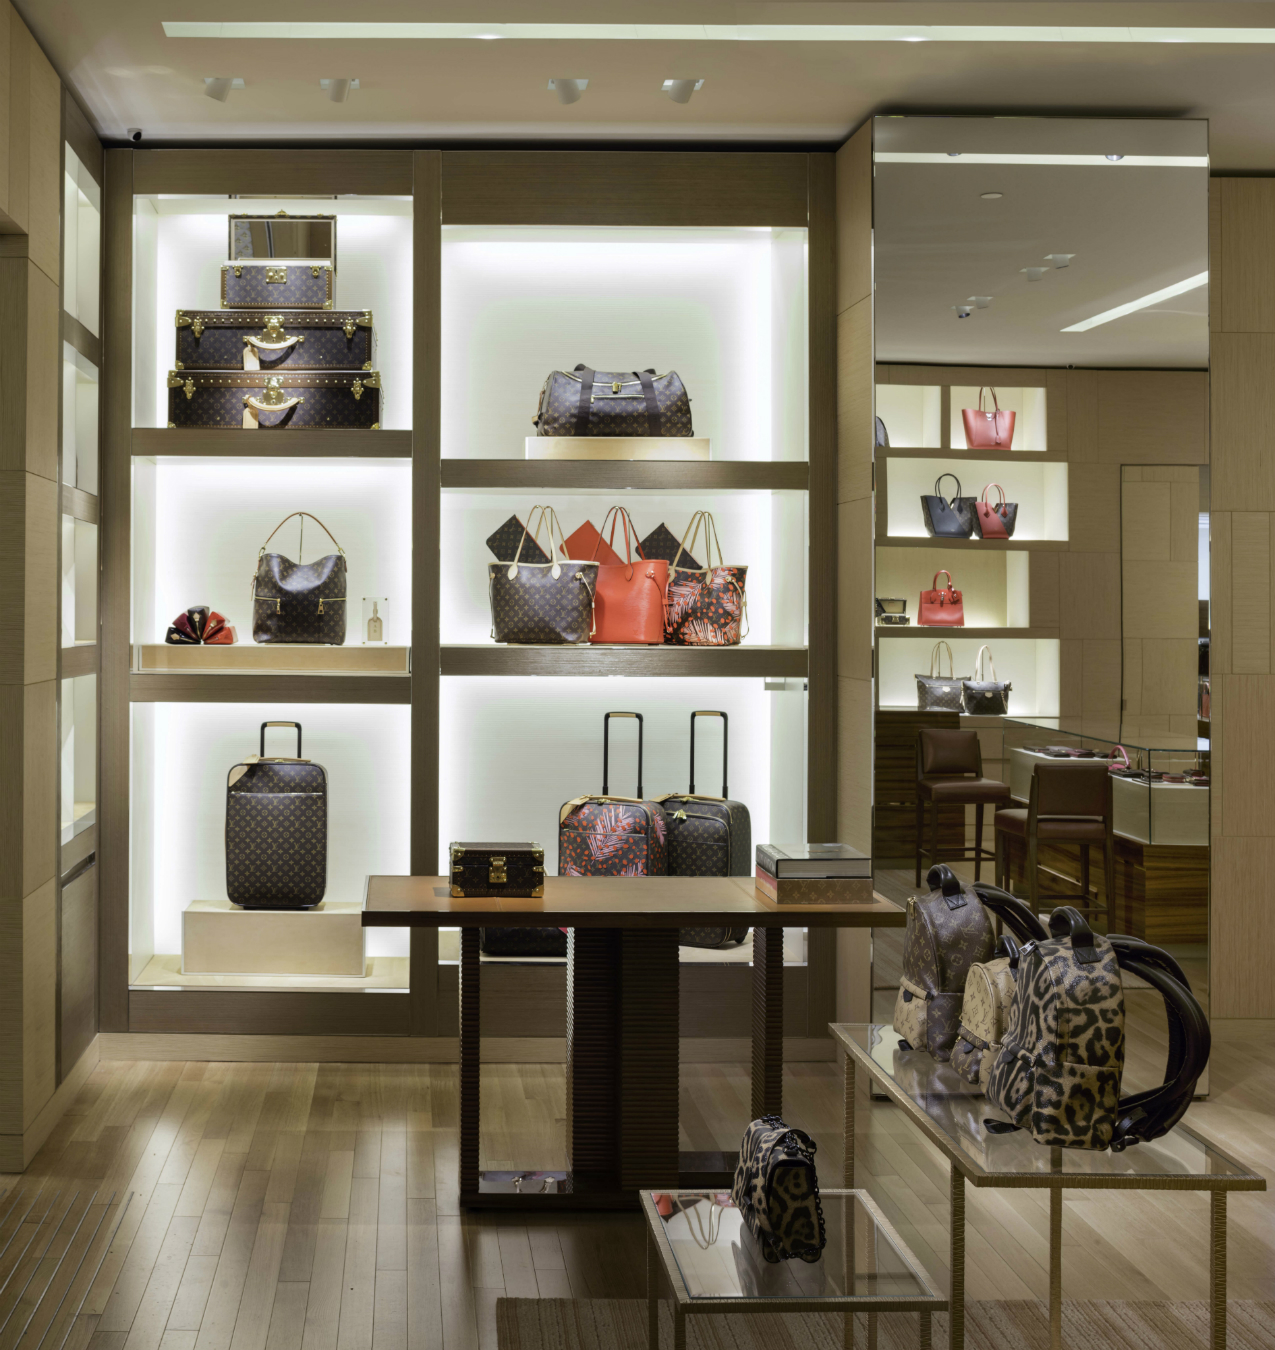 Louis Vuitton Holt Renfrew Bloor St Toronto Store, Canada